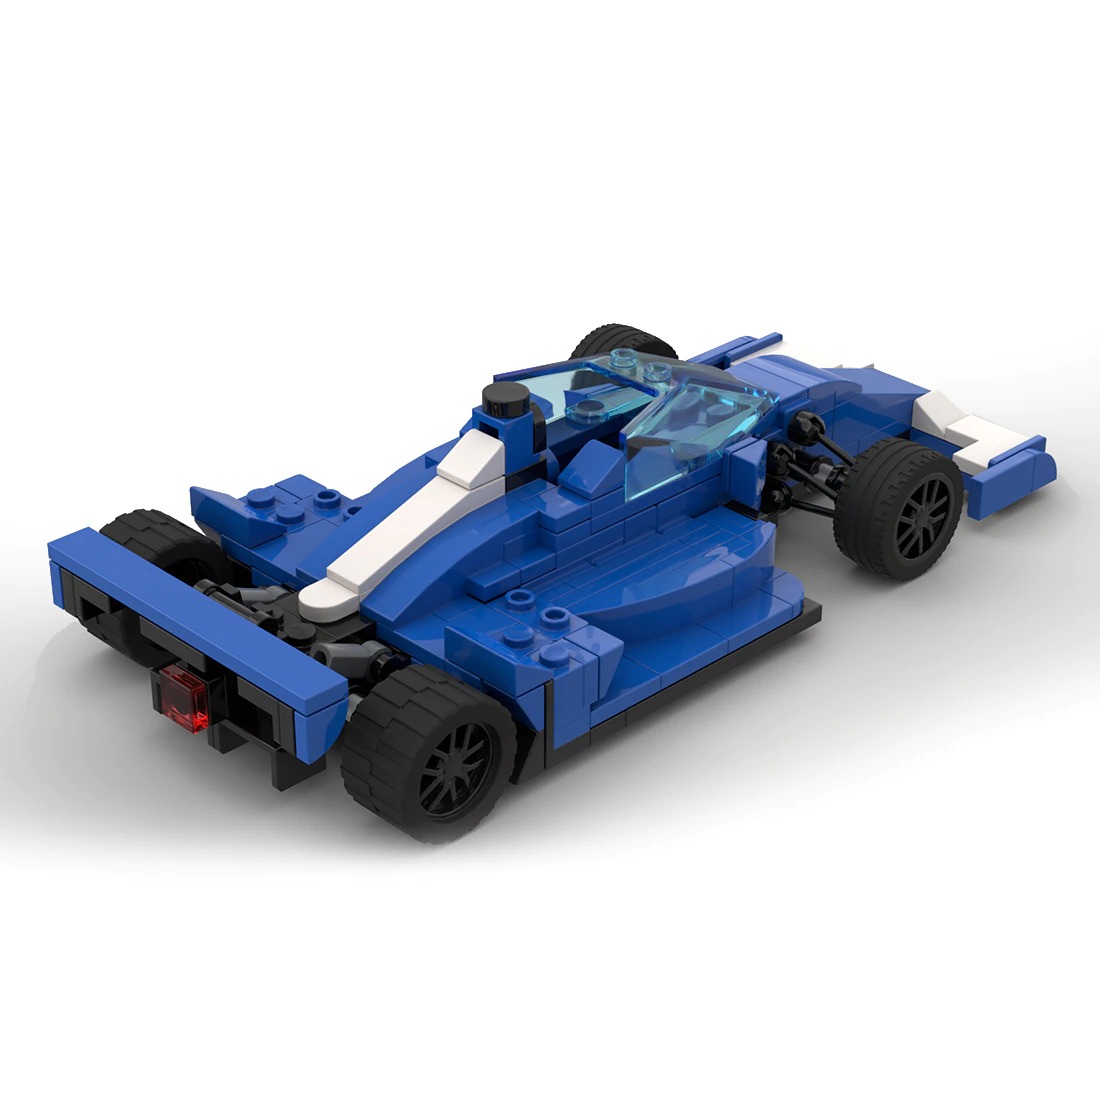 Indycar 2021 DRR Karam Oval Spec MOC-92335 Technic With 253 Pieces